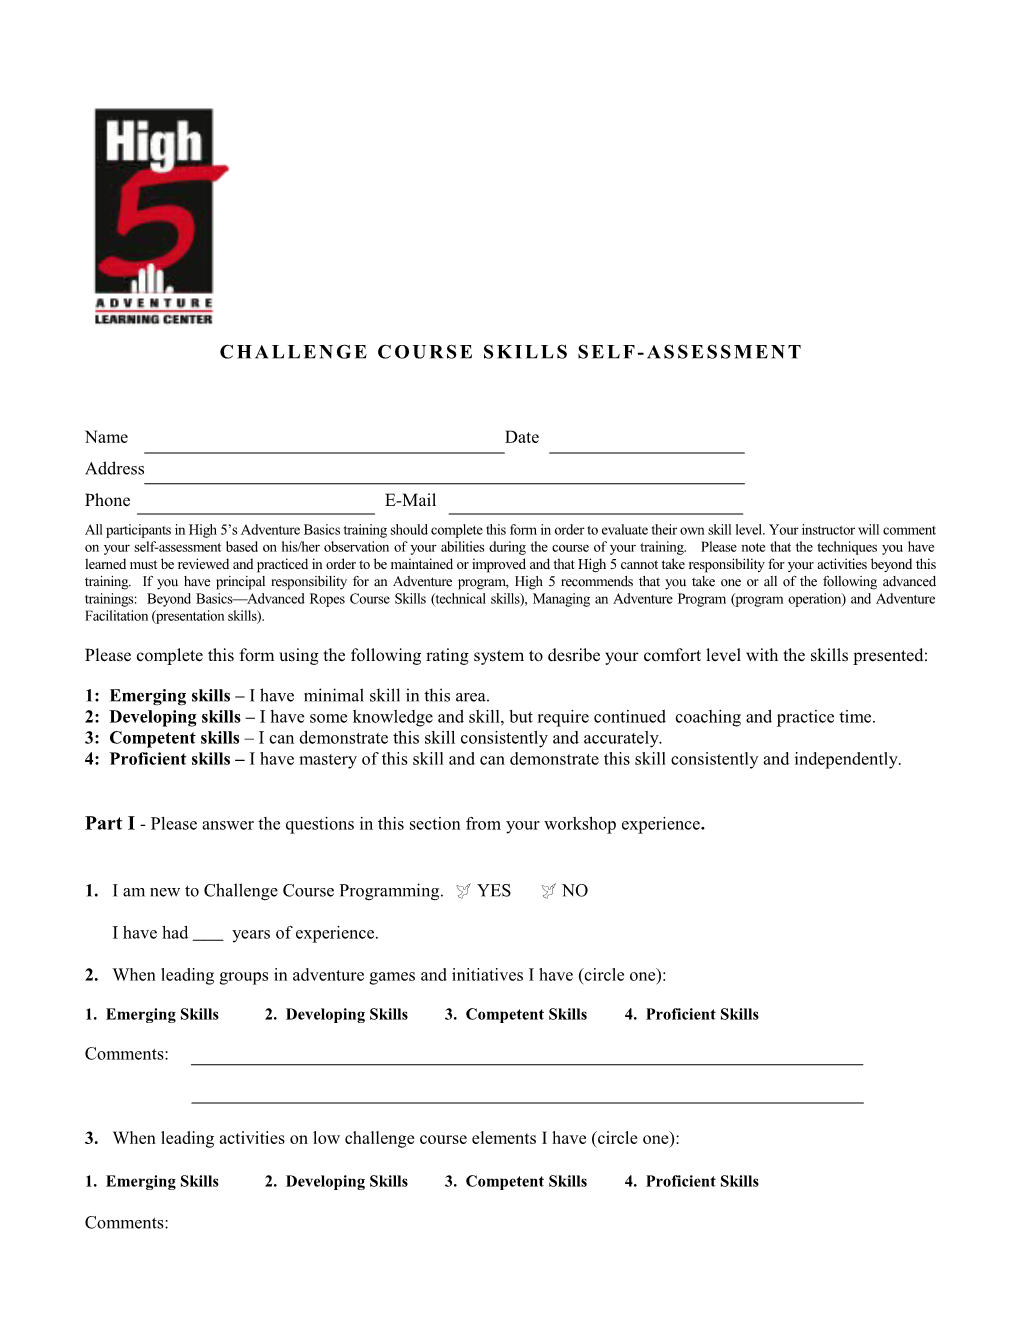 Challenge Course Skills Self-Assessment